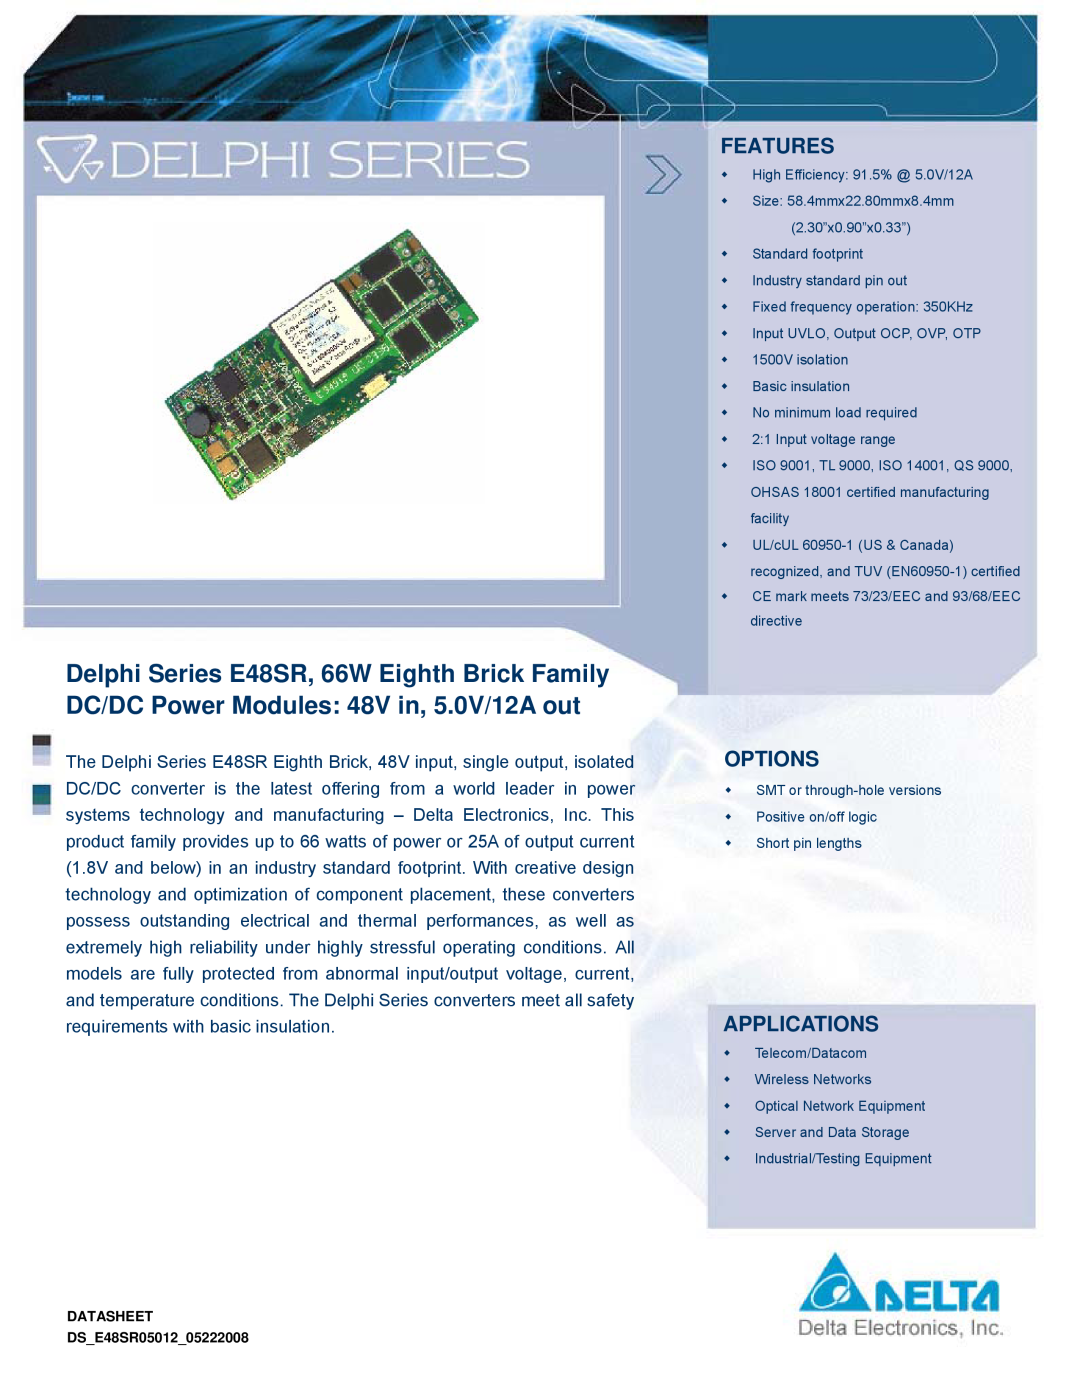 Delta Electronics Series E48SR manual Features, Options, Applications, DATASHEET DSE48SR0501205222008 